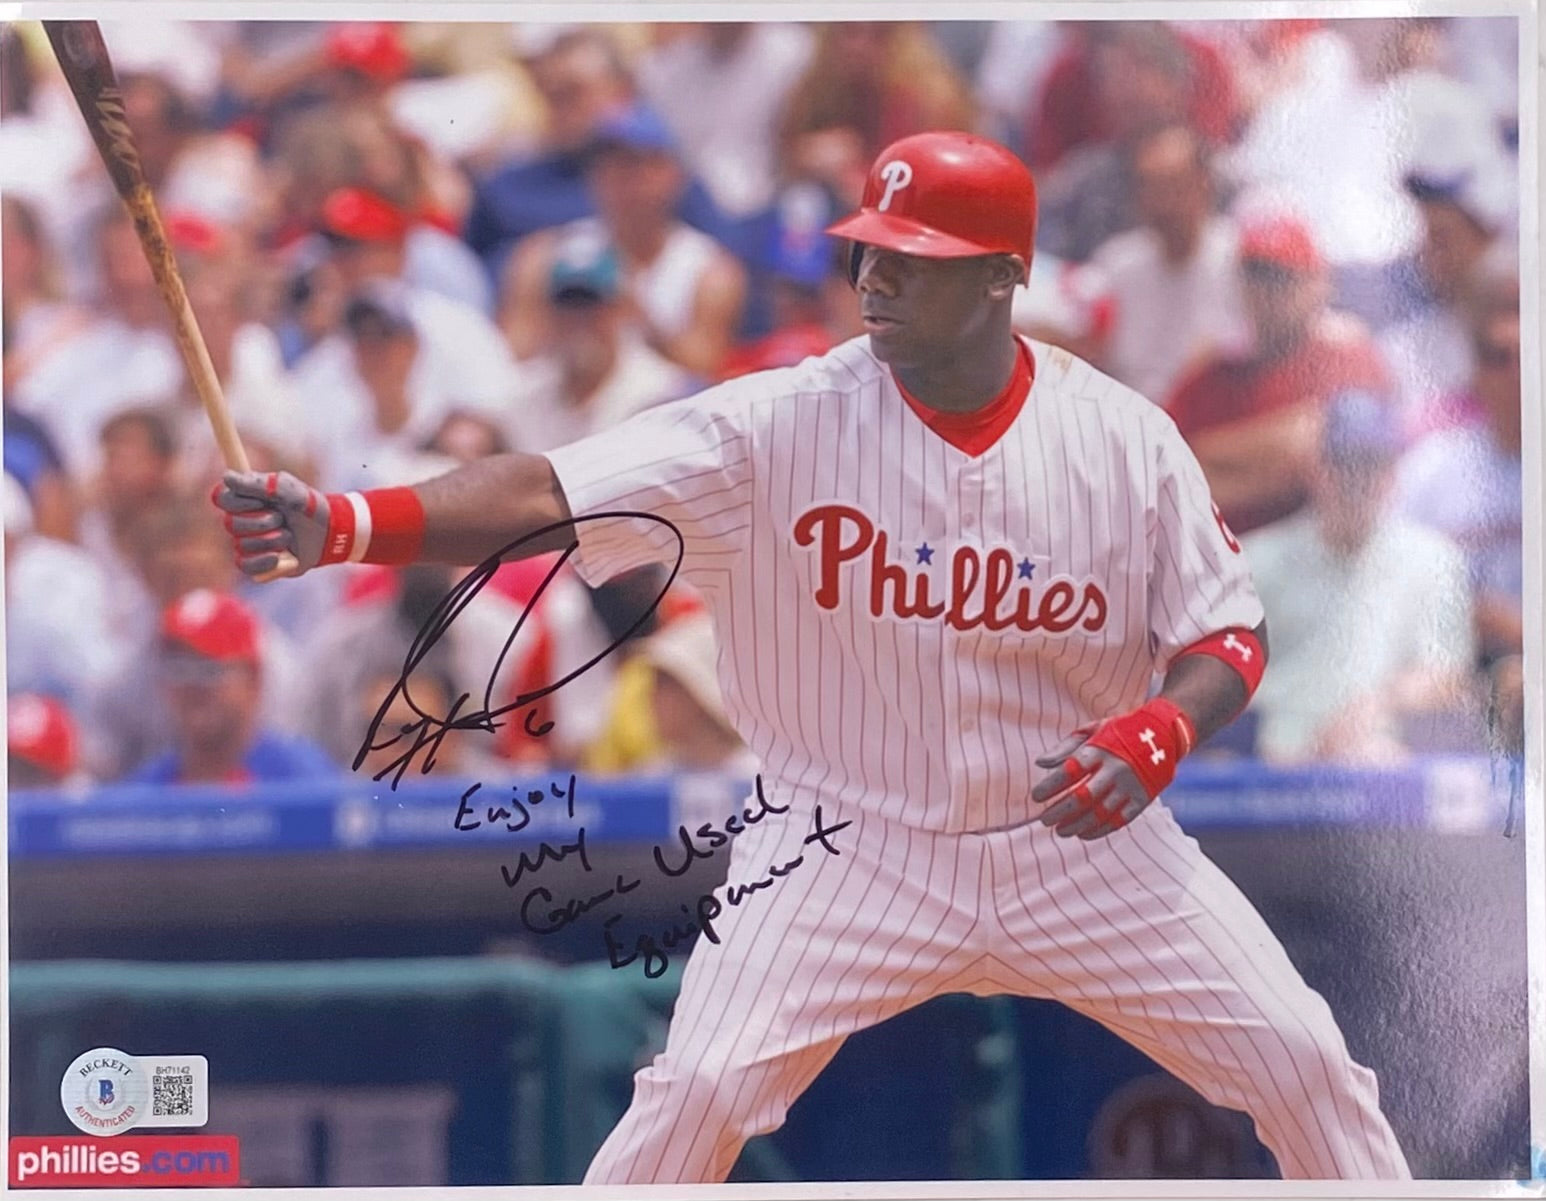 Ryan Howard Autographed Baseball Card